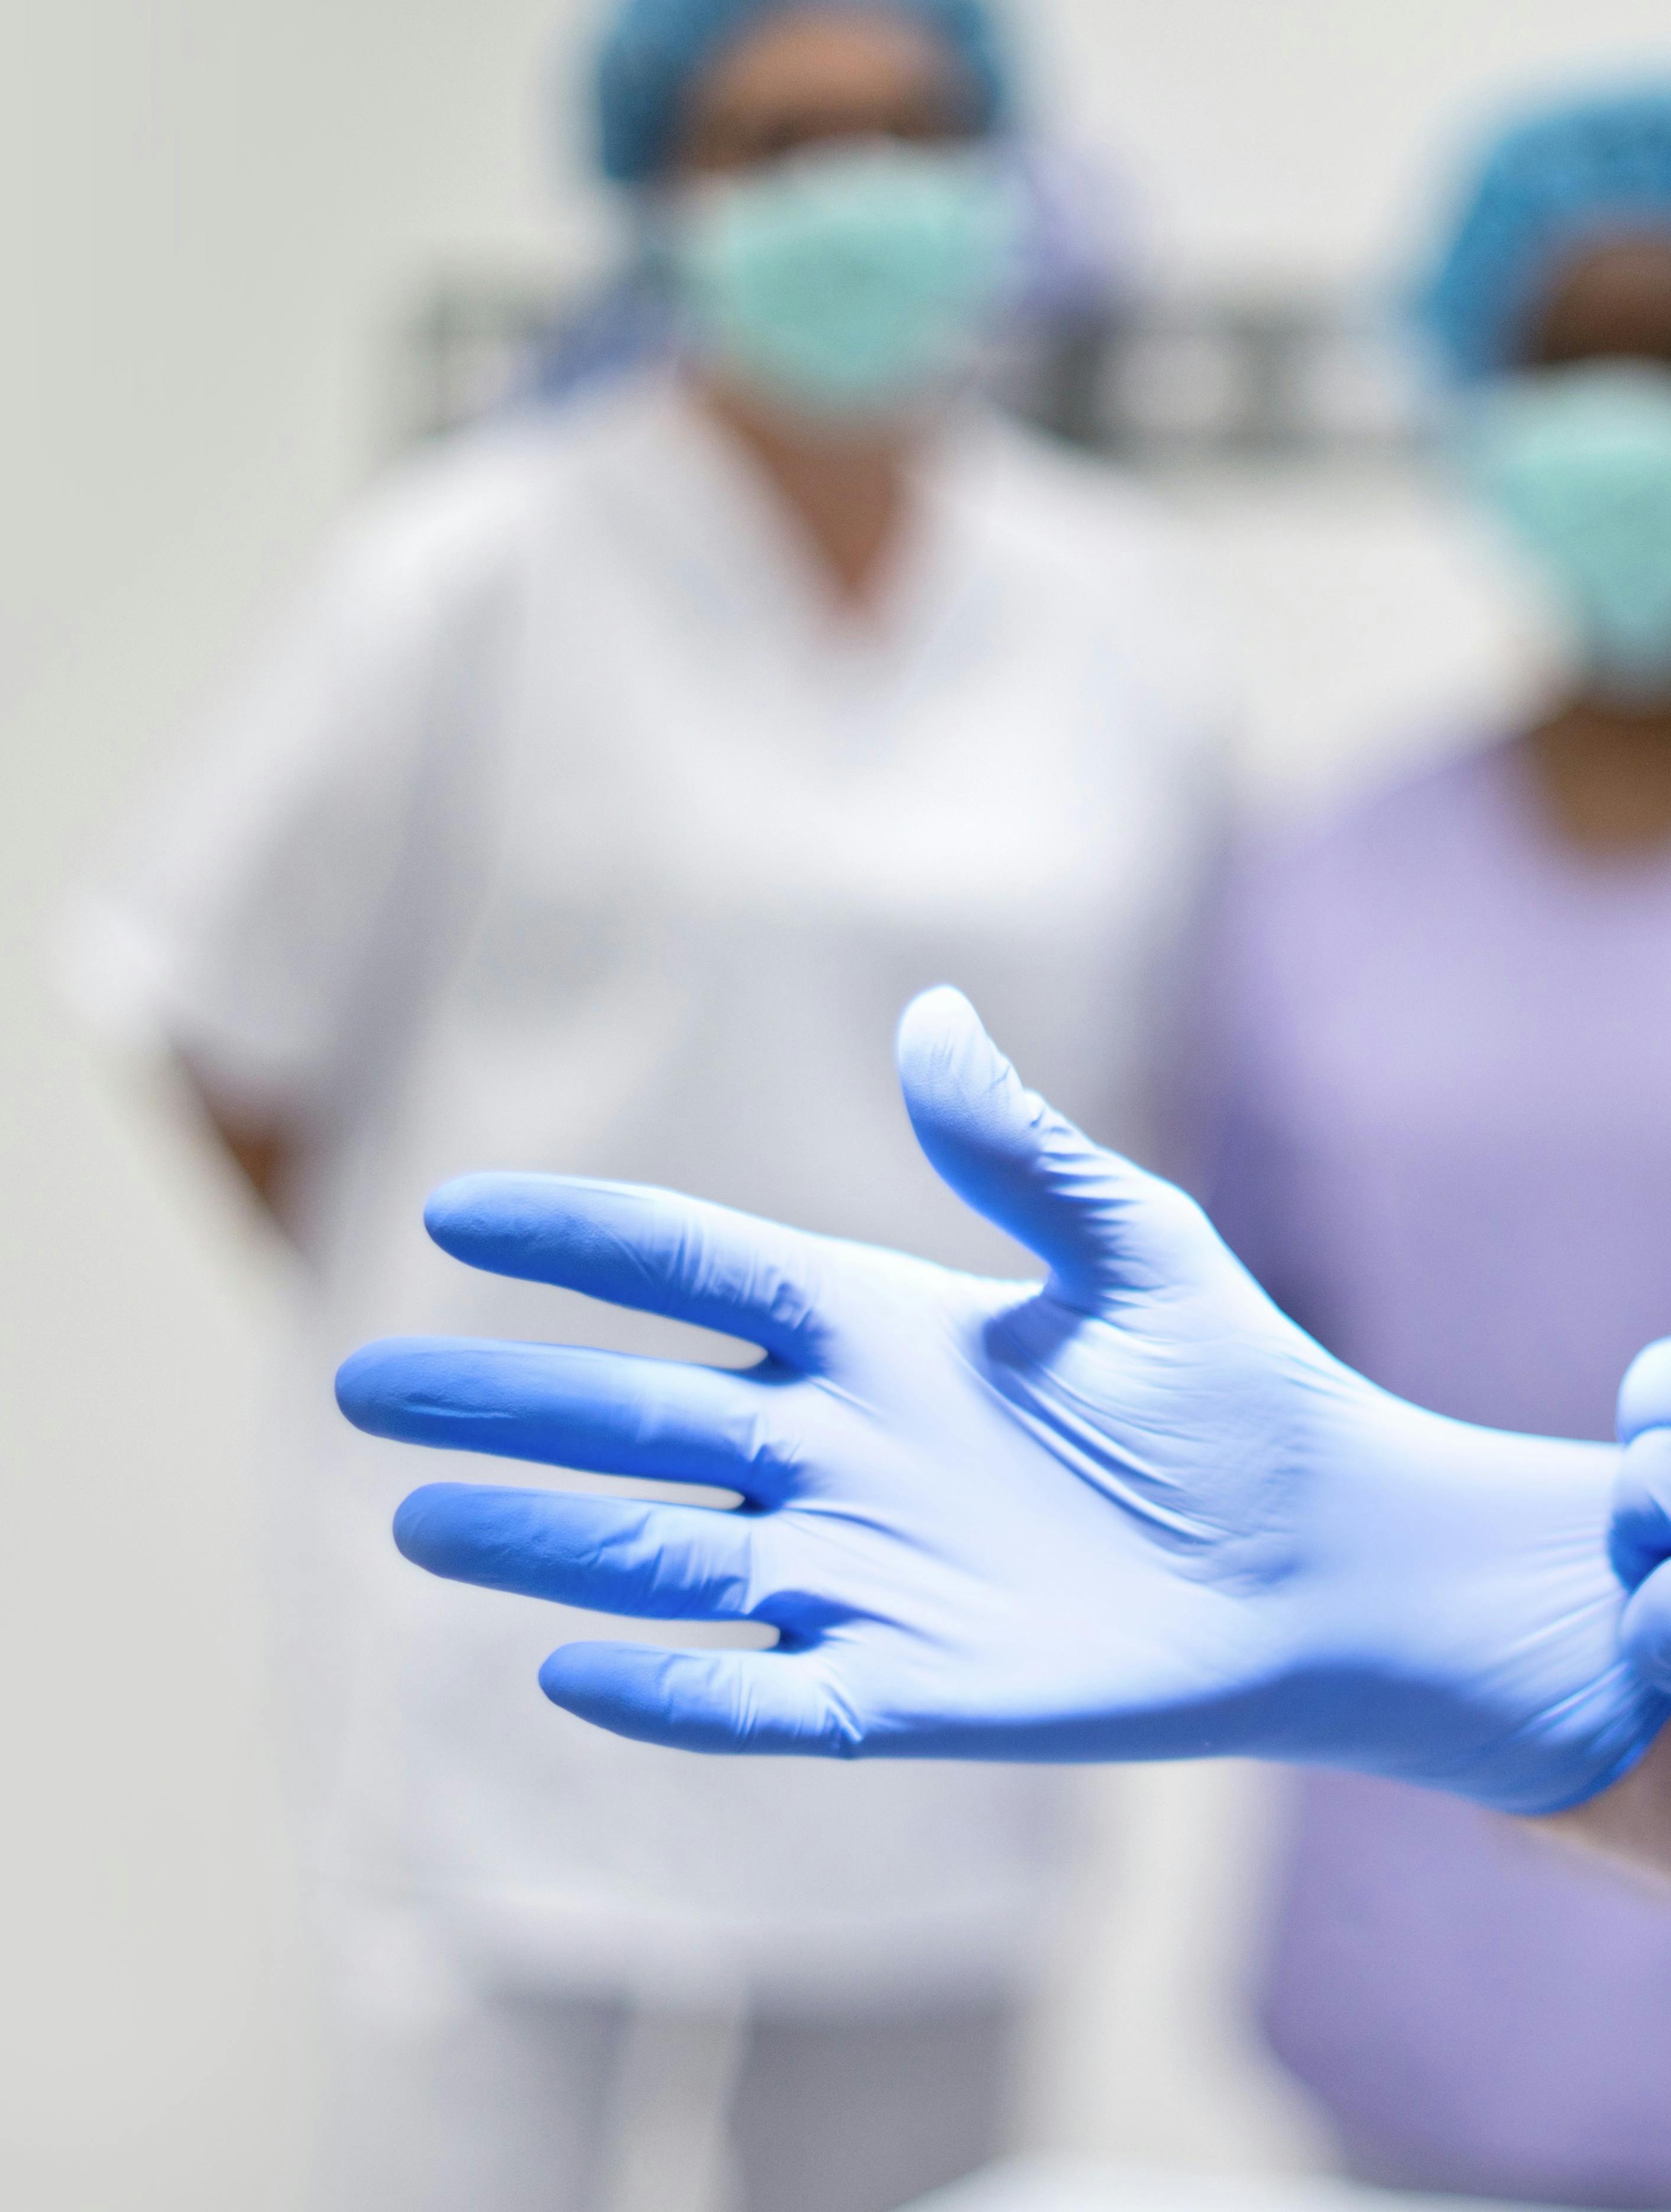  Surgeon putting on latex glove